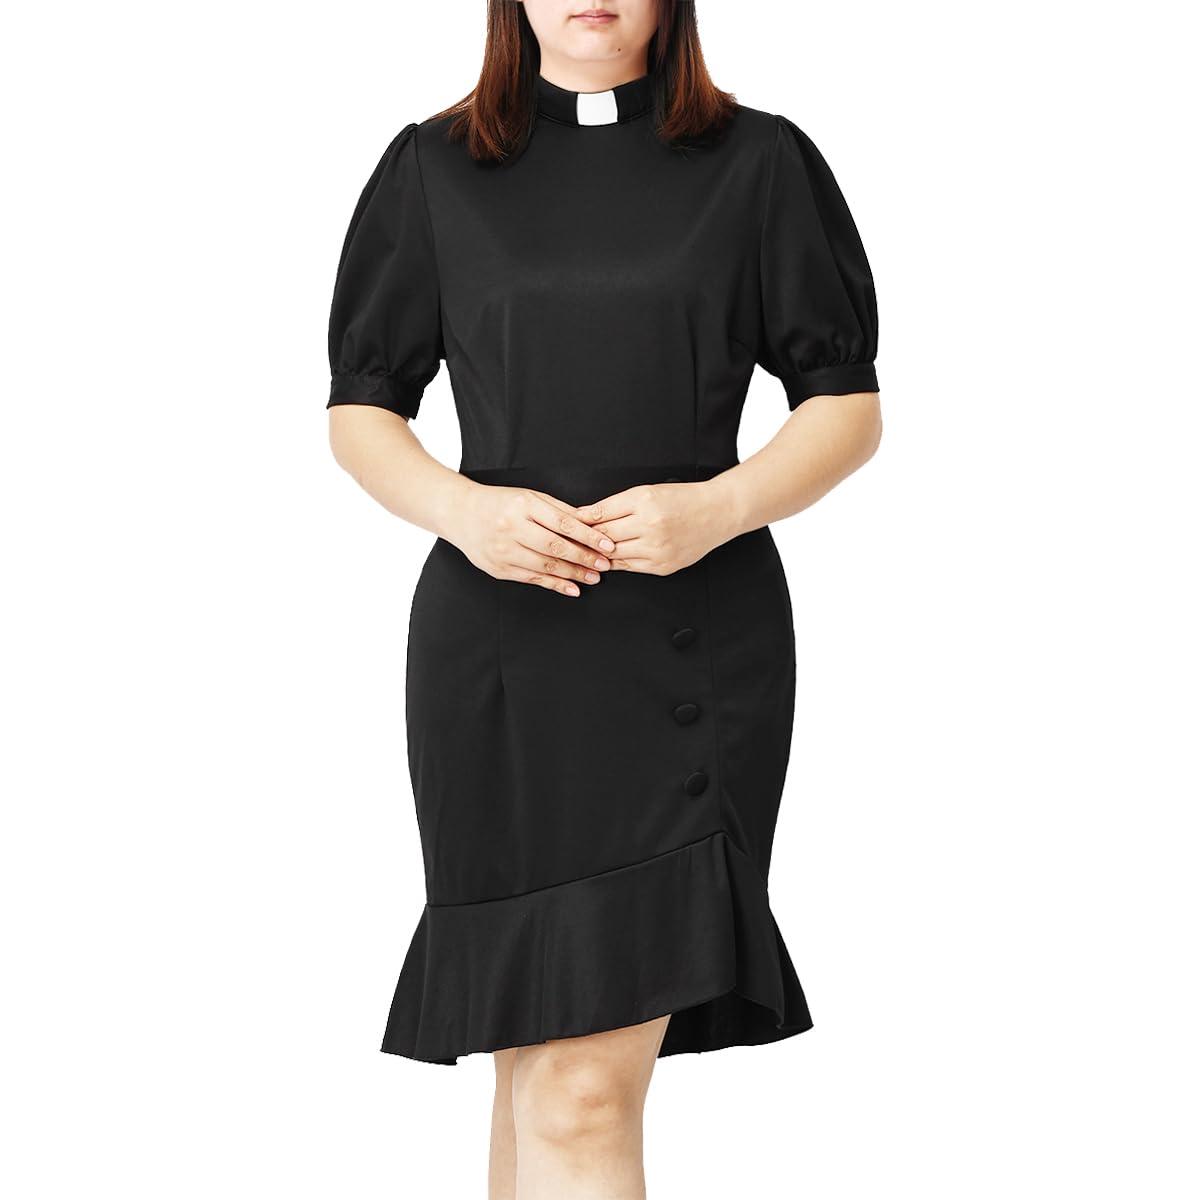 COSDREAMER Christian Catholic Church Womens Clergy Tab Collar Dress Ruffle Hem Bodycon Dress，L Black